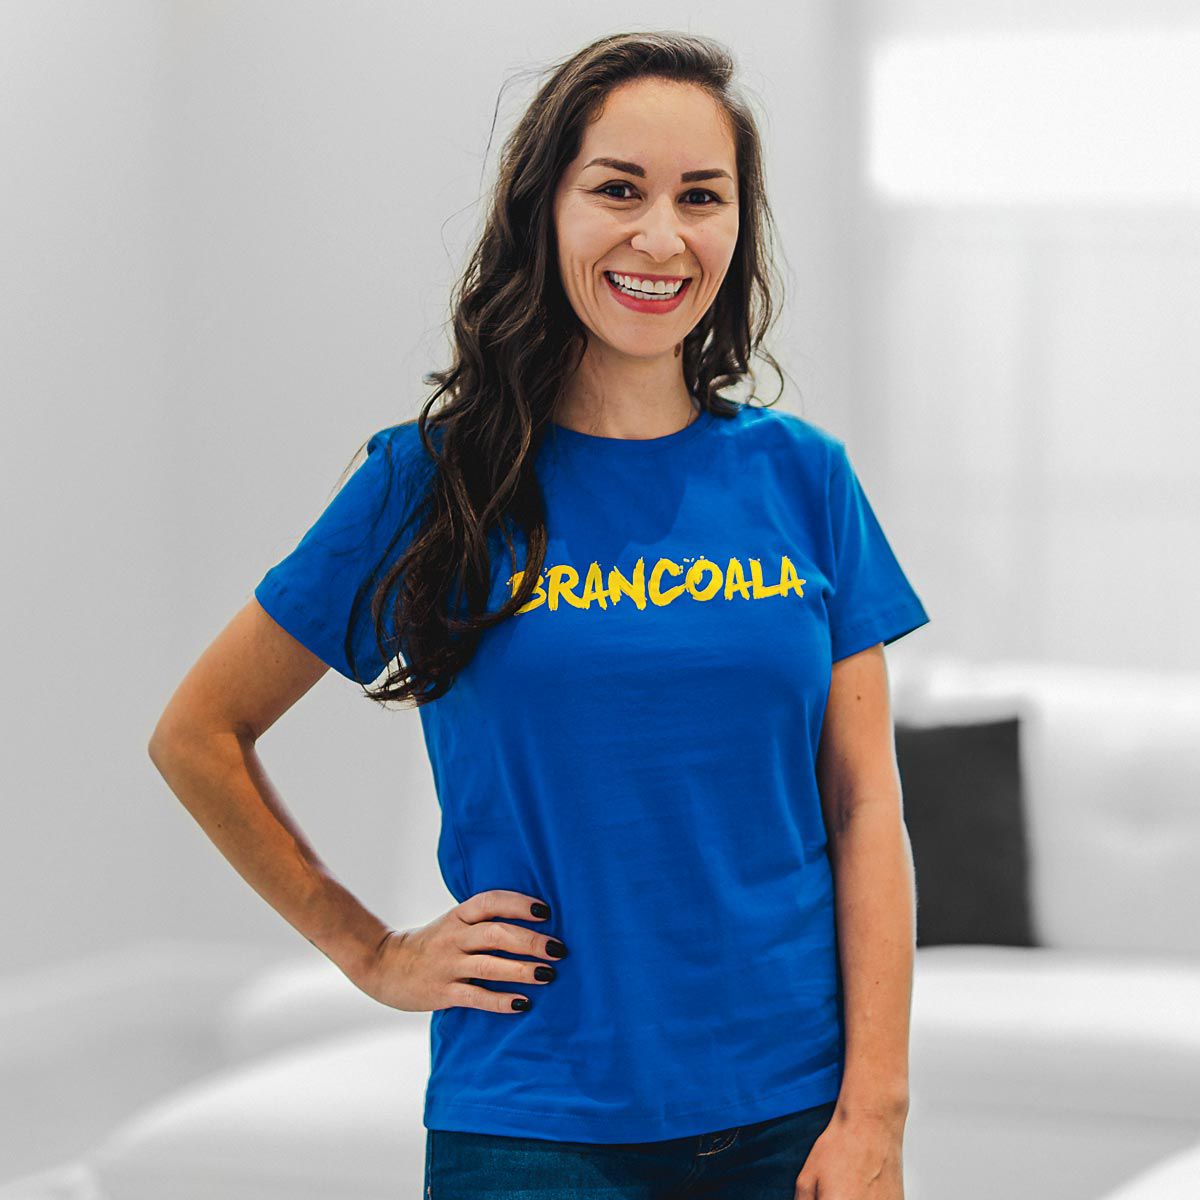 Boné Brancoala - Azul com Preto - Loja Brancoala - Camisetas e